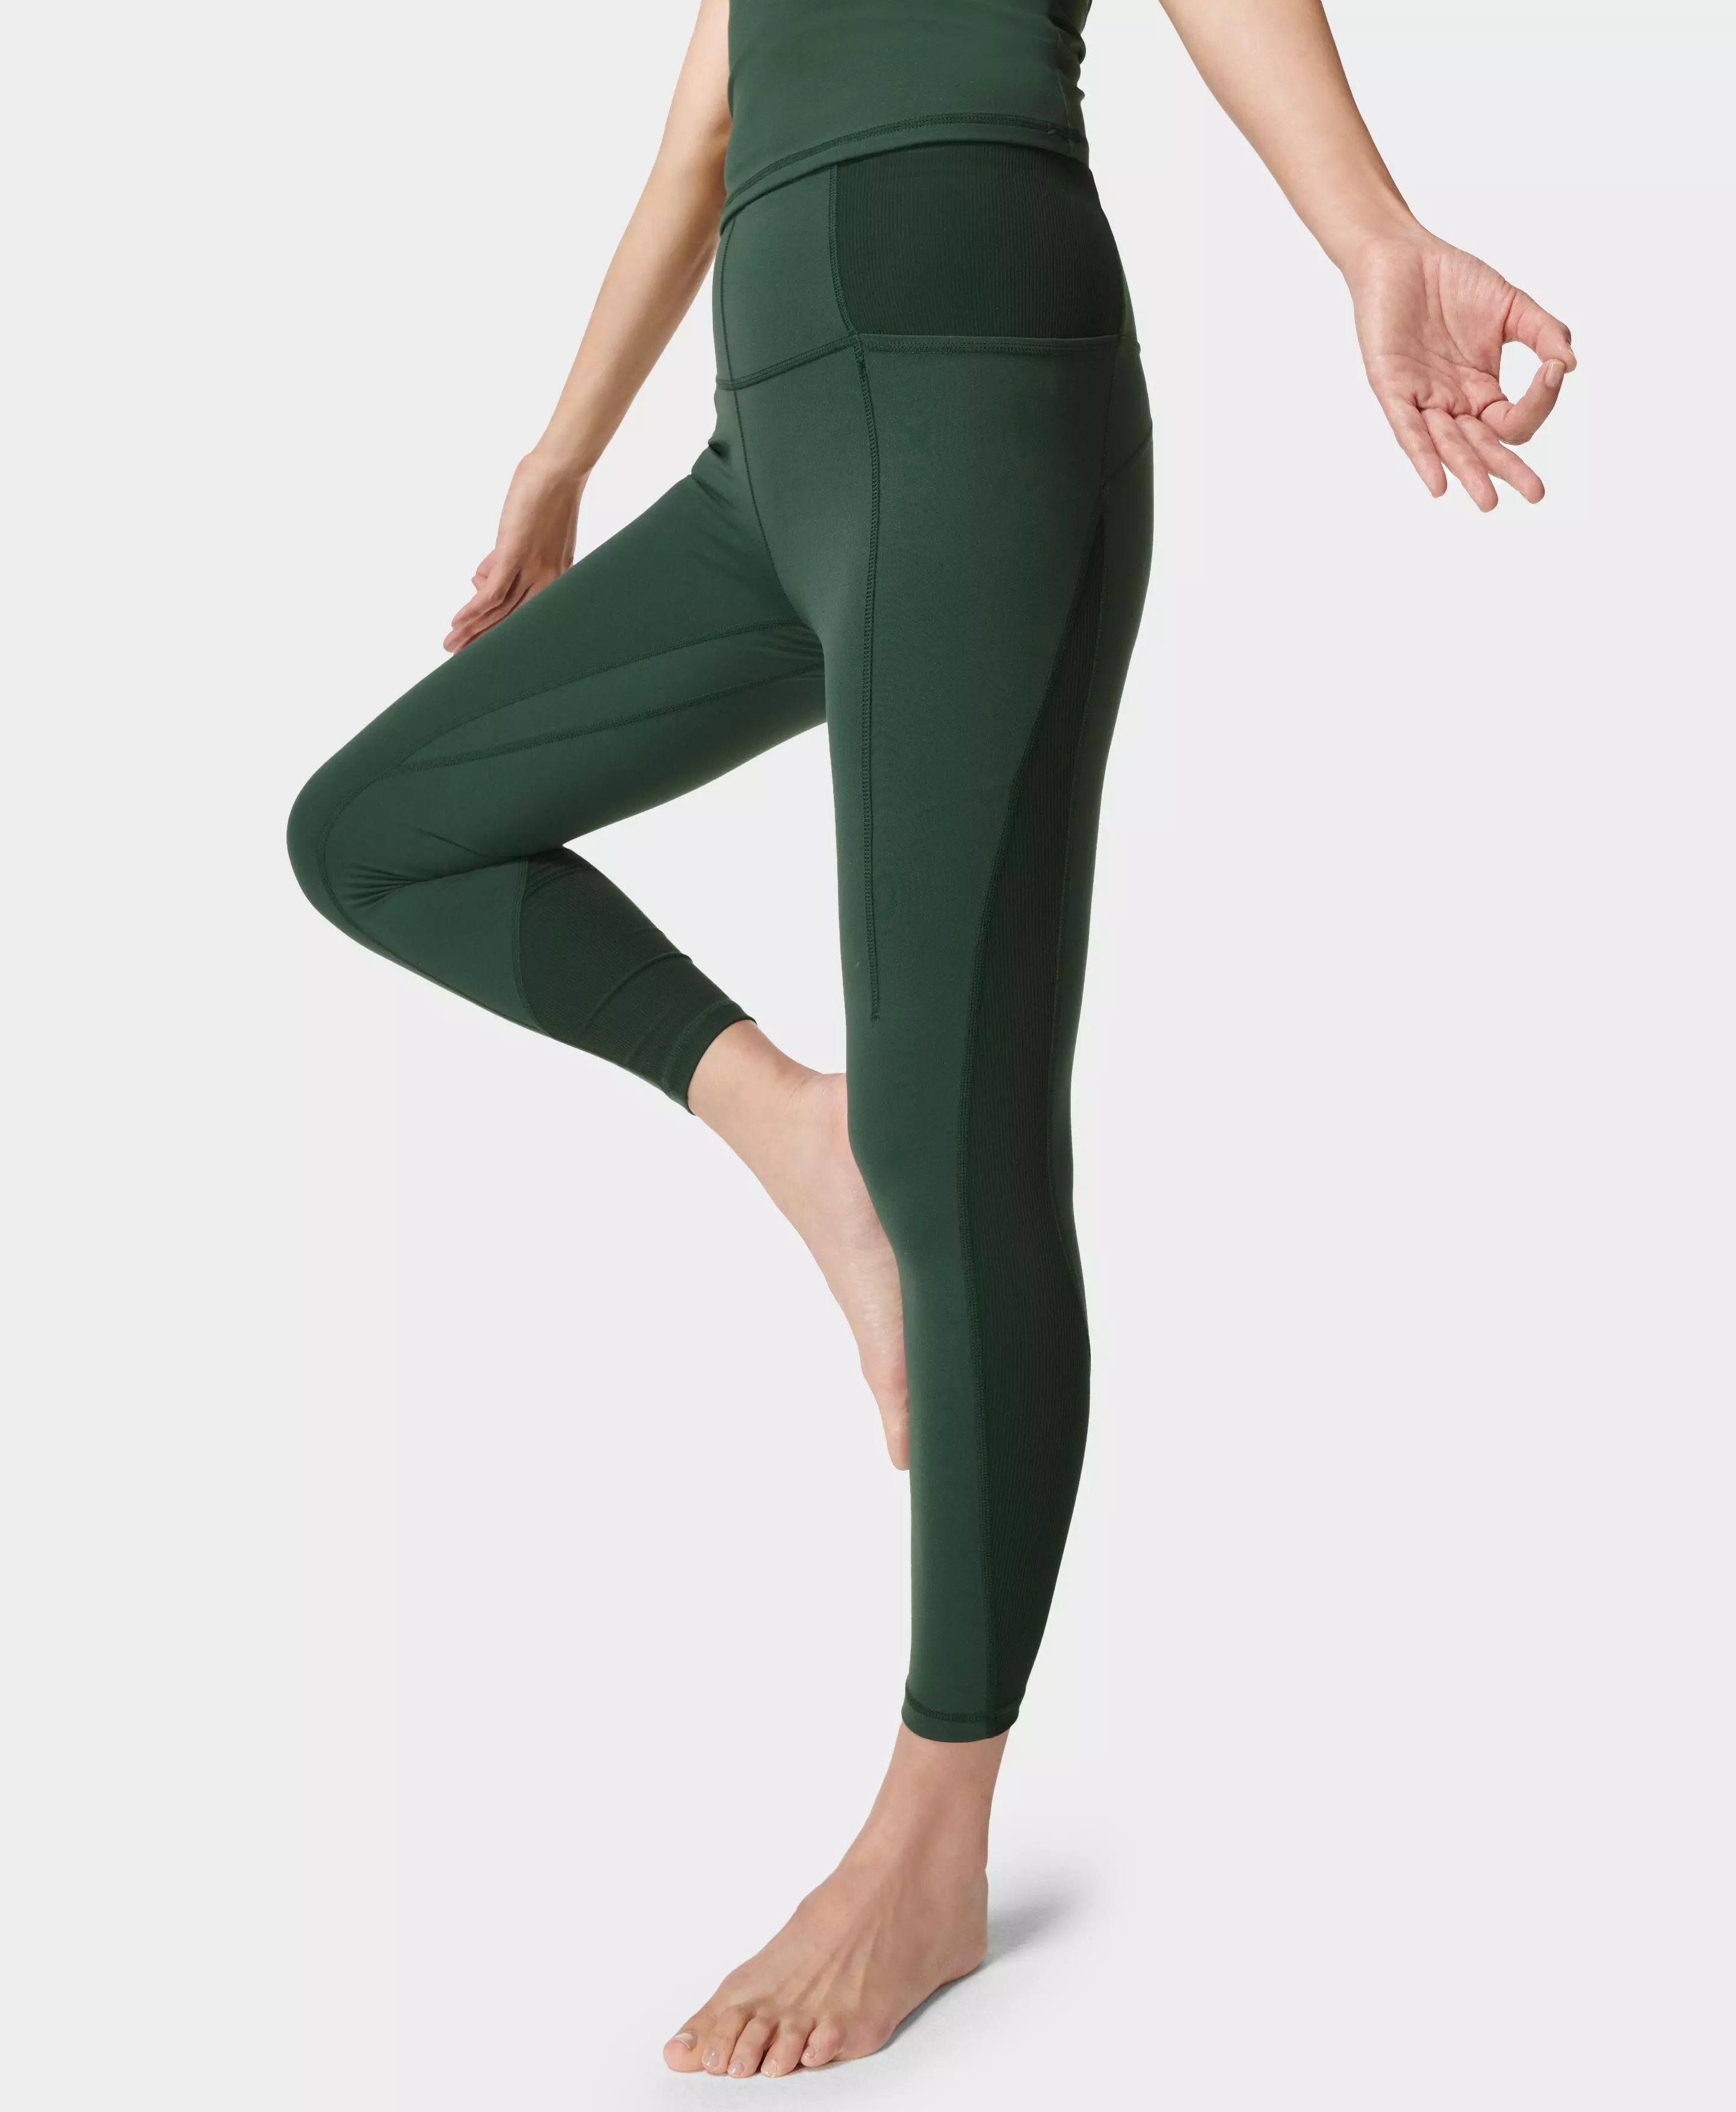 Pockets For Women - Sweaty Betty Super Soft Flow Ribbed 7/8 Yoga Leggings,  Green, Women's